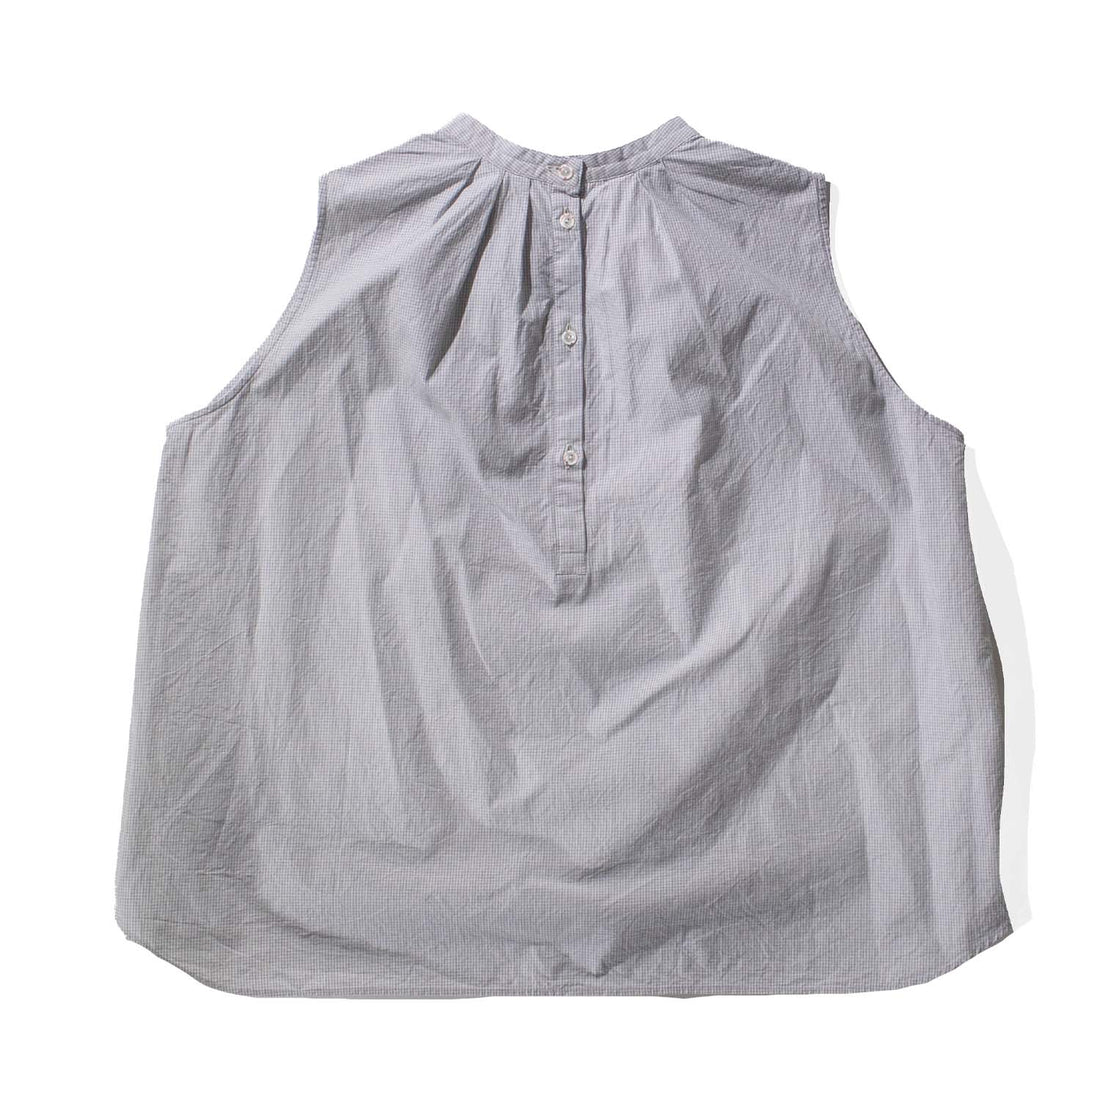 Chimala Band Collar Sleeveless Shirt in Navy x Off White